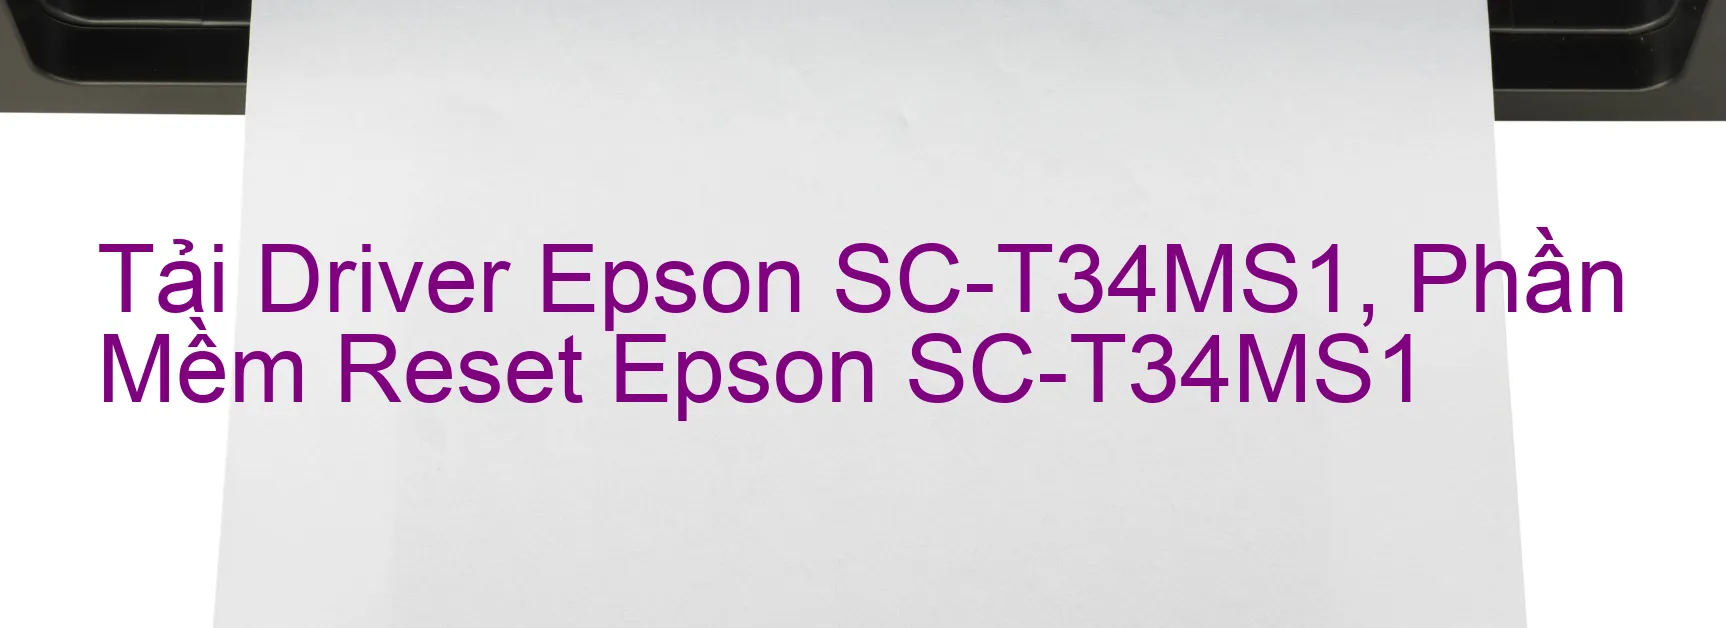 Driver Epson SC-T34MS1, Phần Mềm Reset Epson SC-T34MS1